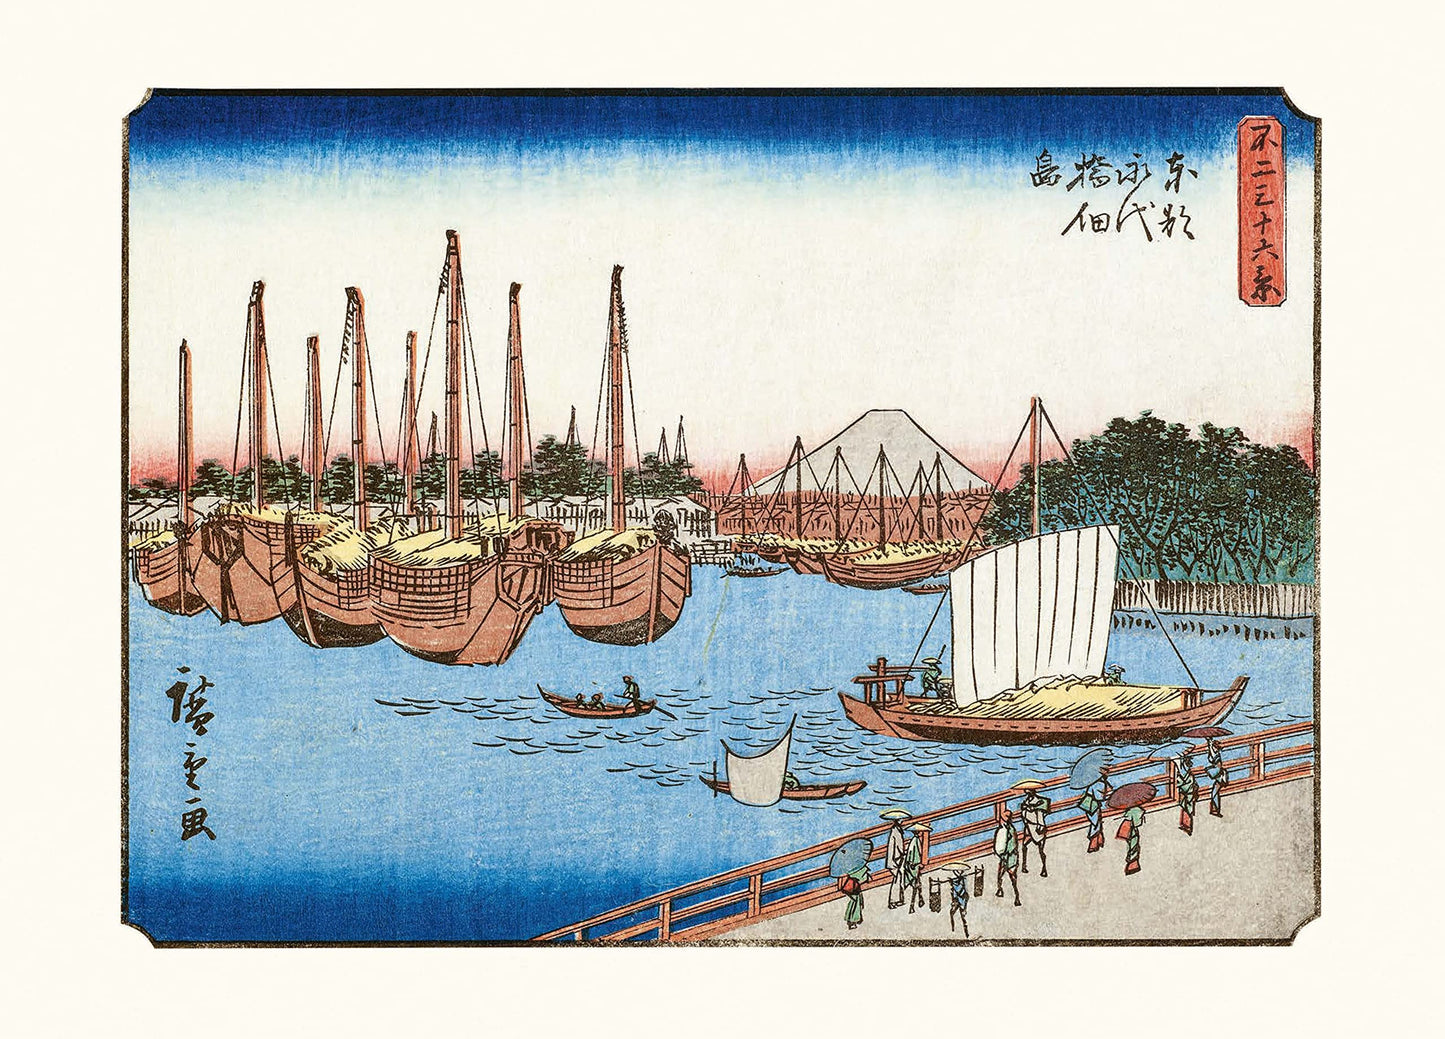 Hiroshige: Thirty-six Views of Mount Fuji (accordion-fold edition)